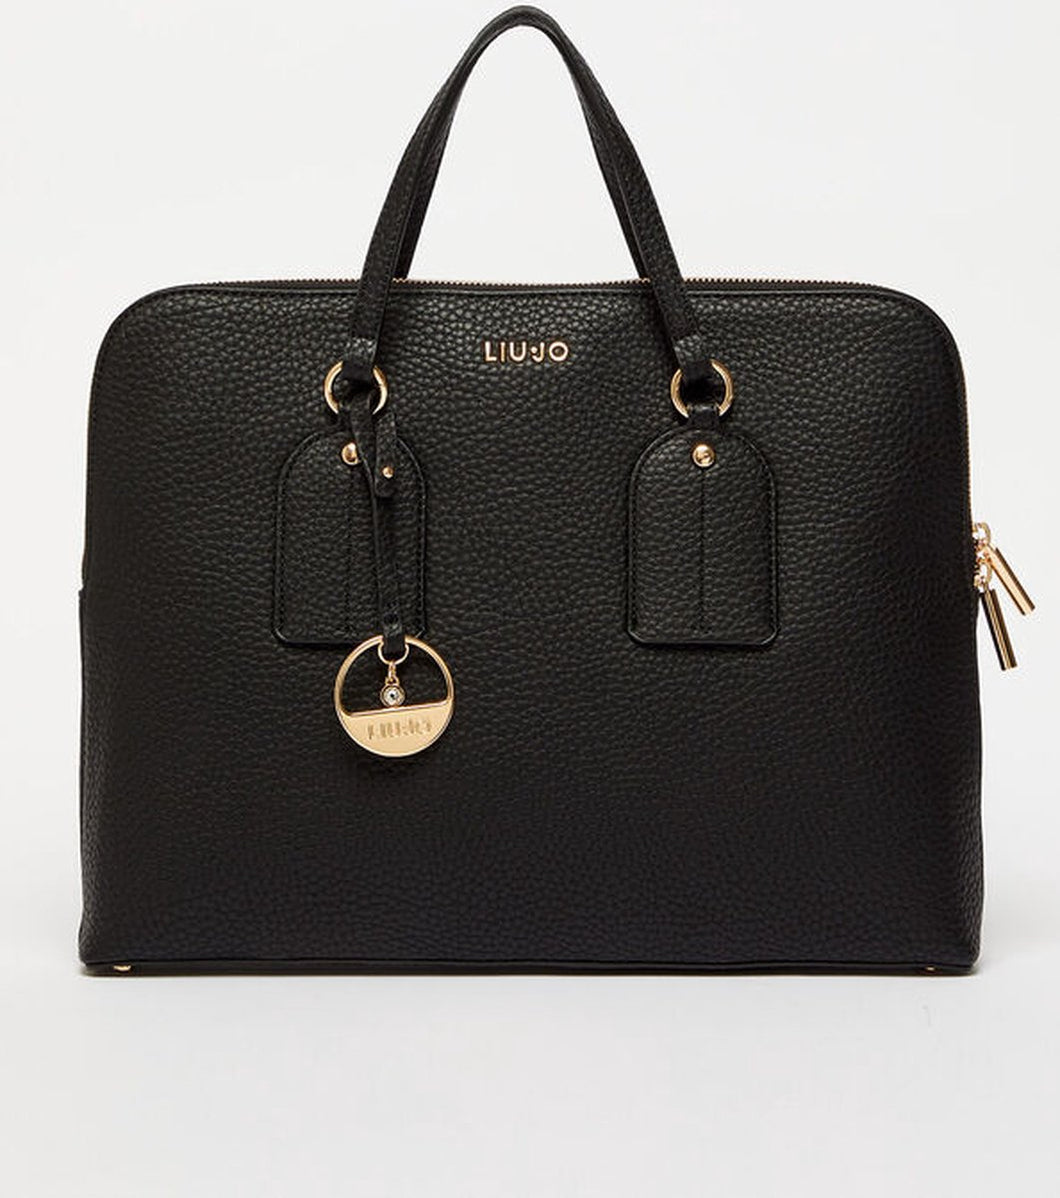 LIU JO Eco-friendly handbag with charm